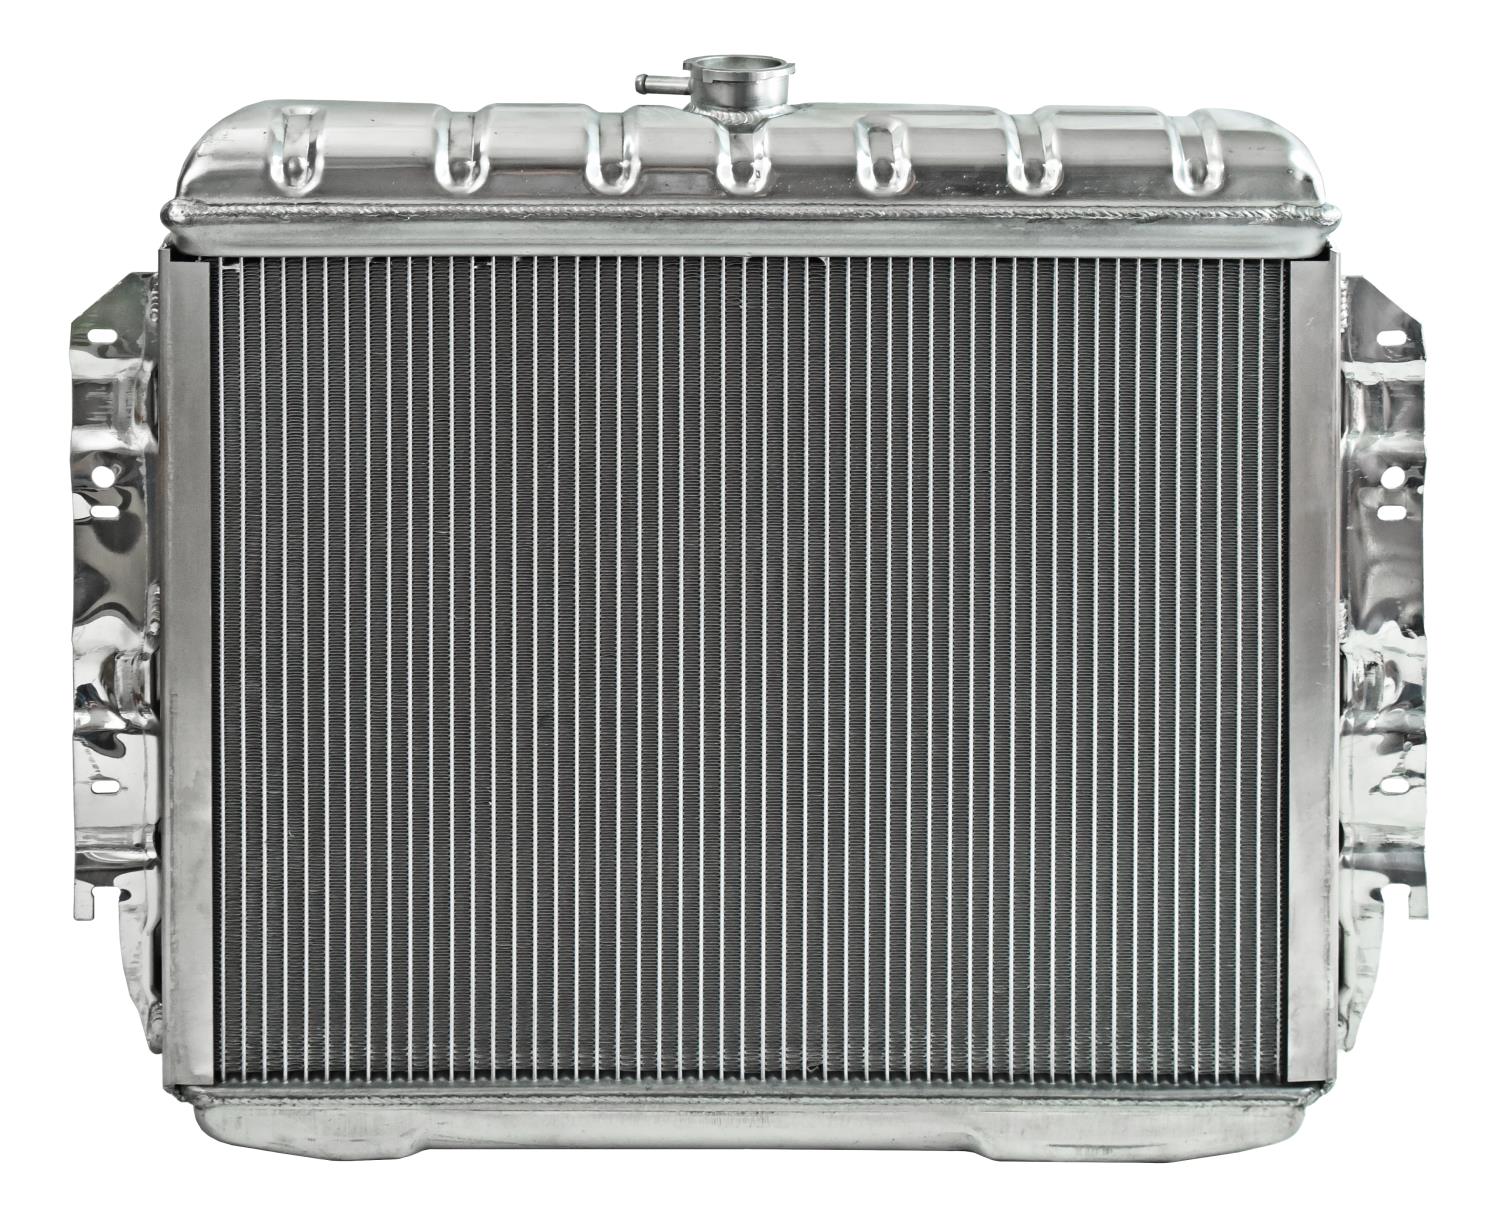 Reproduction Aluminum Radiator for Select 1966-1969 Mopar B